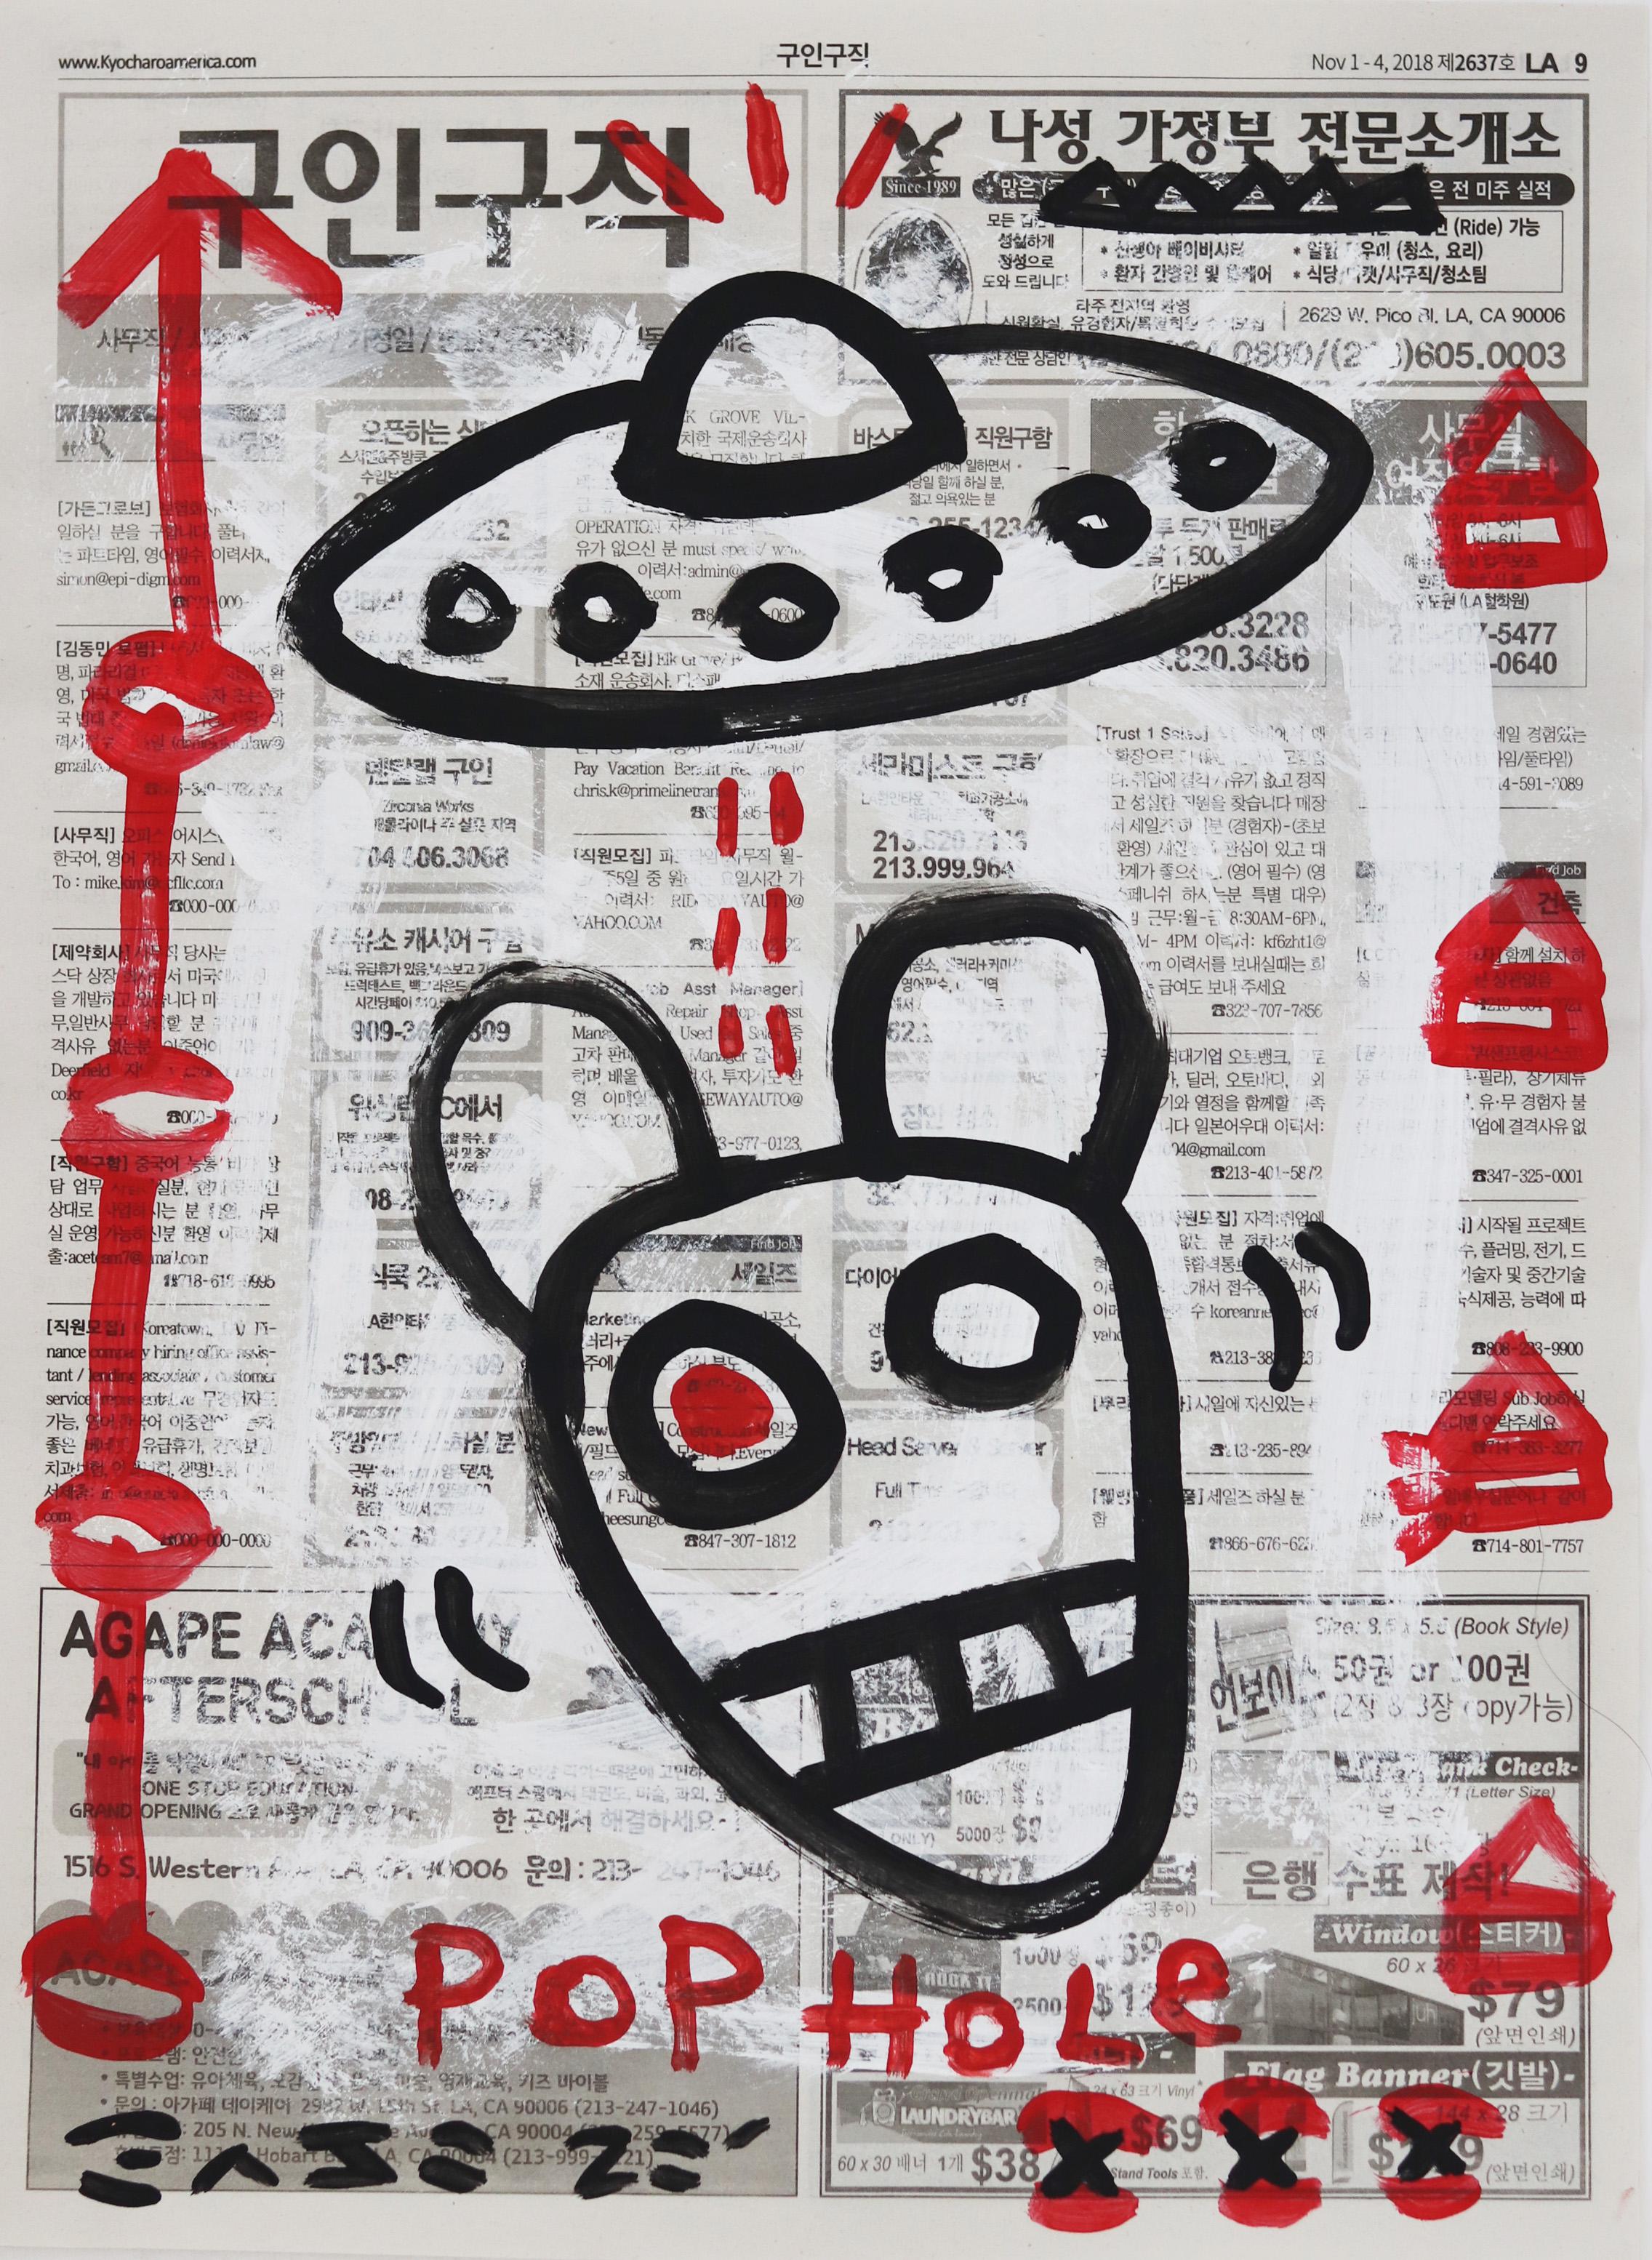 Mission Pophole – Original Gary John Pop Art UFO-Gemälde auf Zeitung, Missionspapier